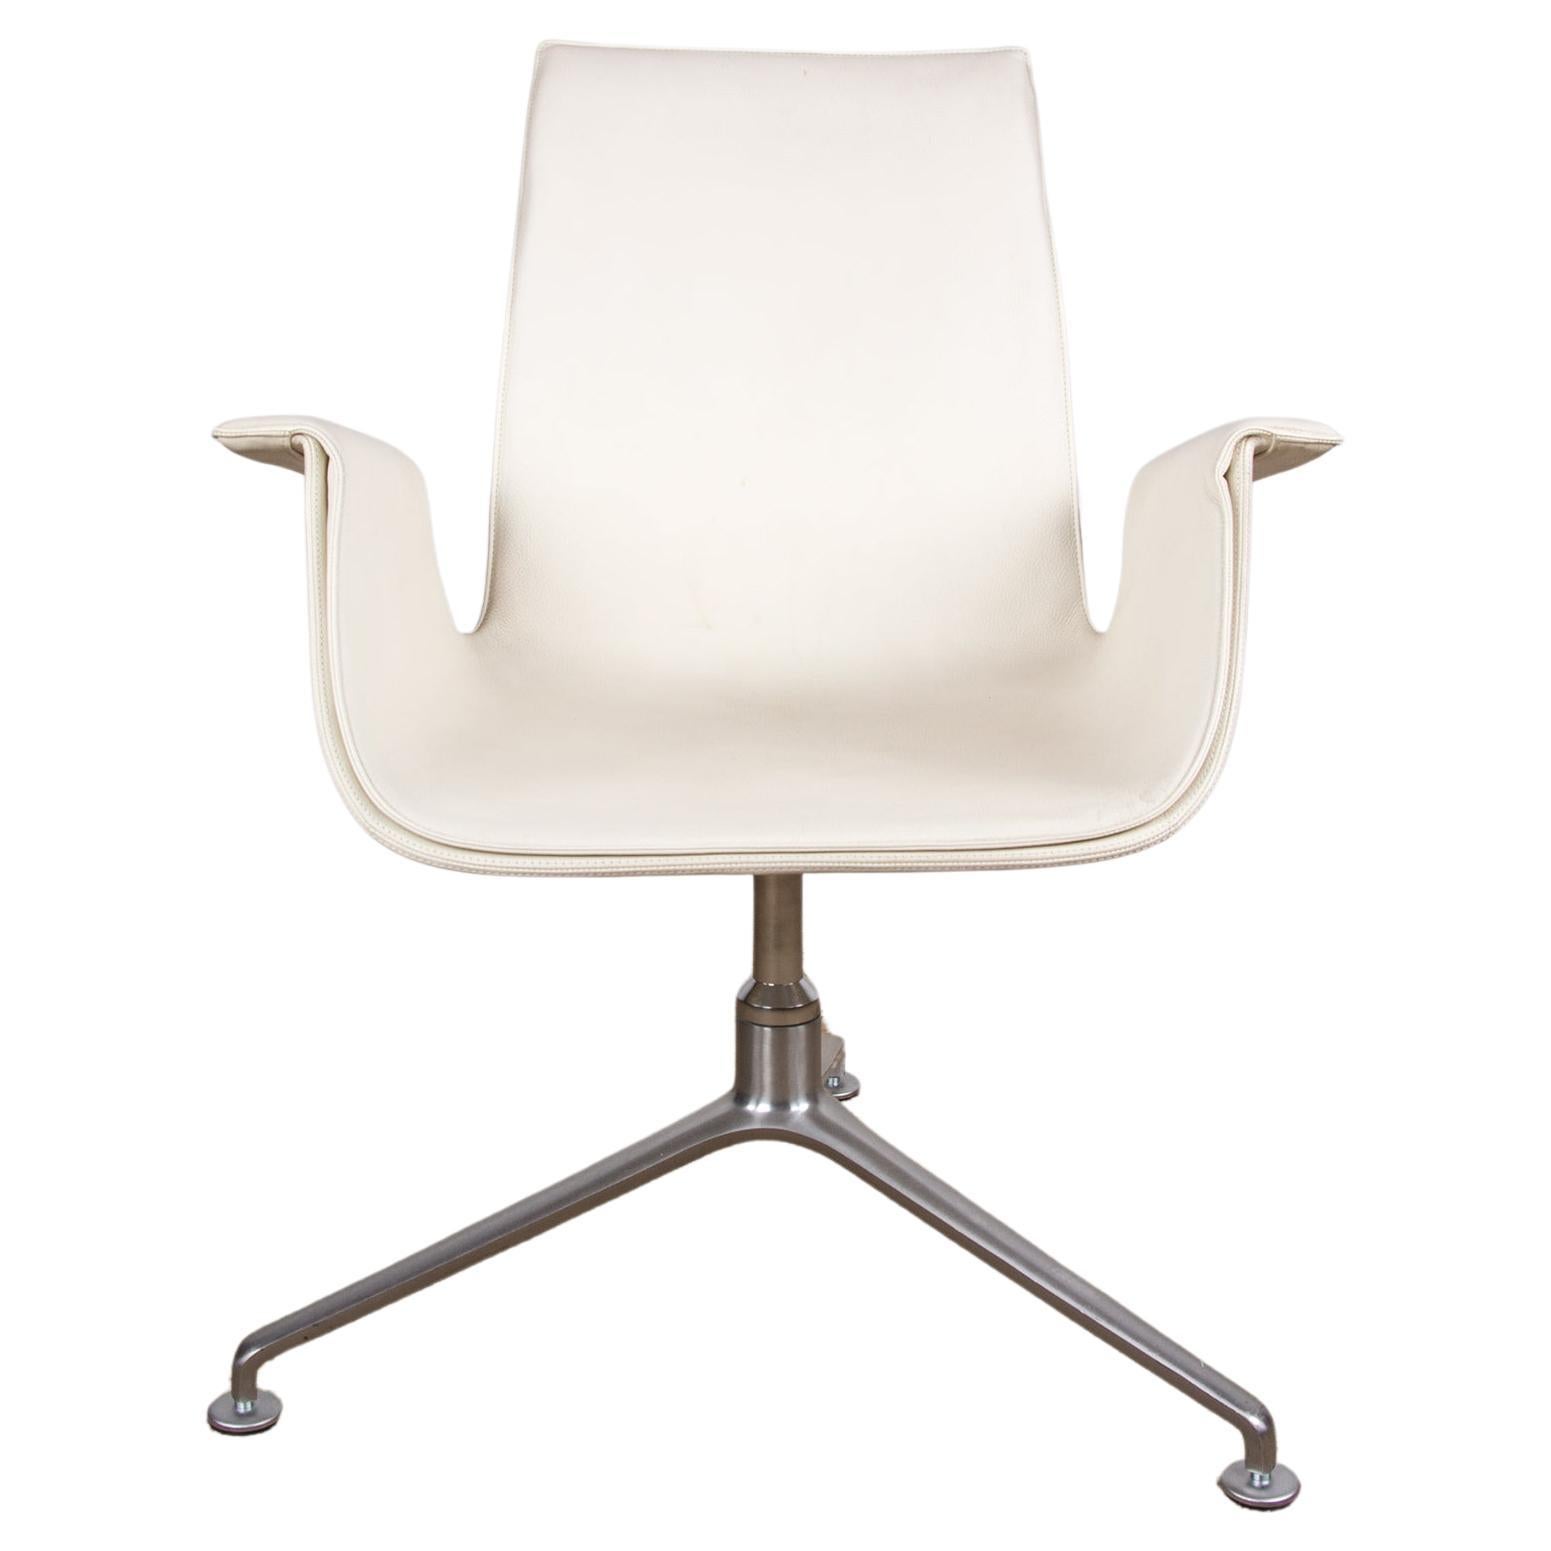 Dänischer Sessel aus weißem Leder und verchromtem Stahl, Modell FK 6725 Fabricius/Knoll